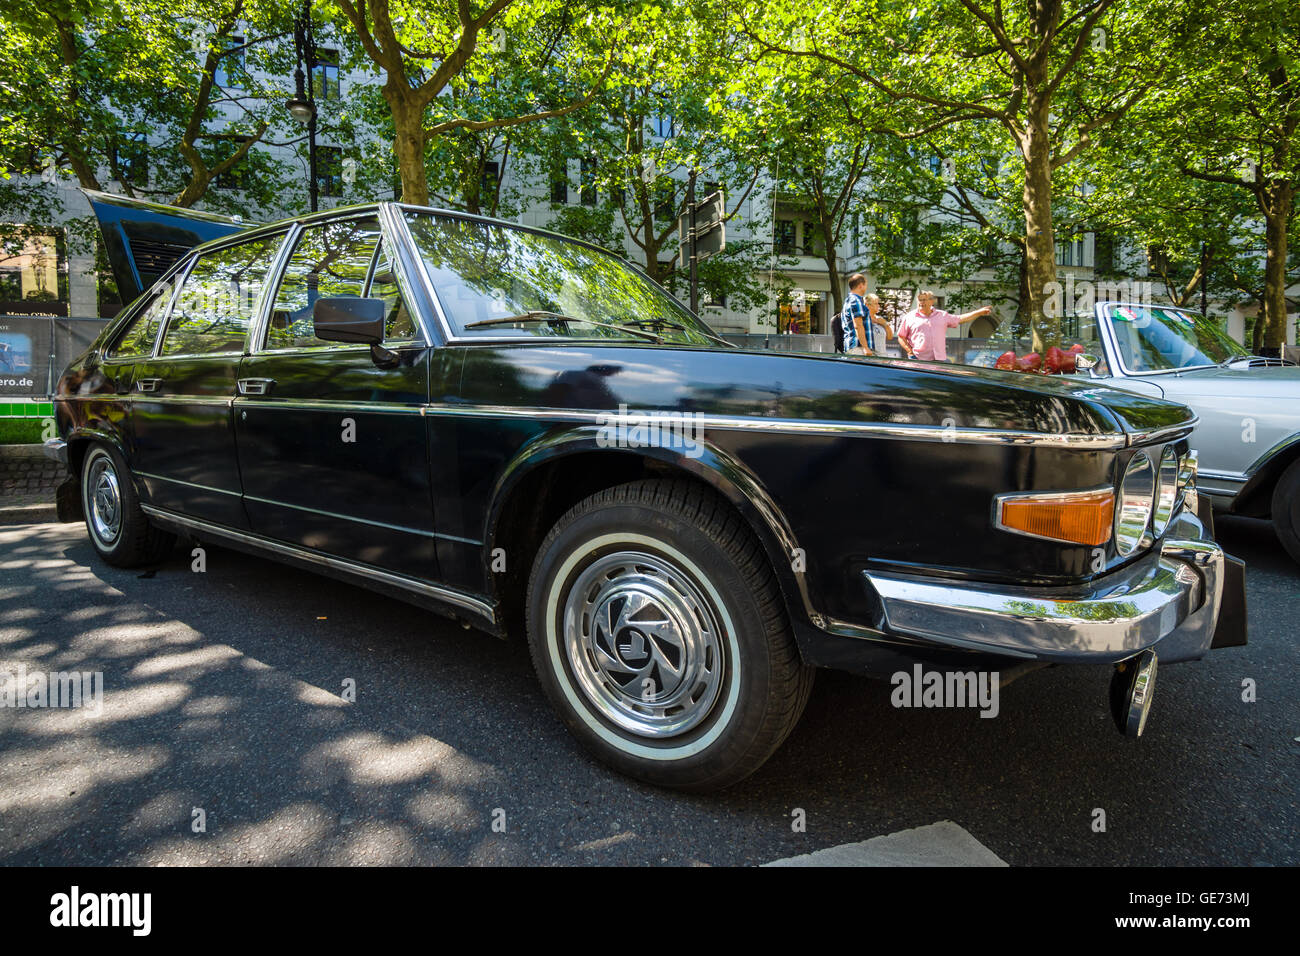 BERLIN - Juin 05, 2016 : voiture de luxe pleine grandeur 613 Tatra. Les Classic Days Berlin 2016. Banque D'Images